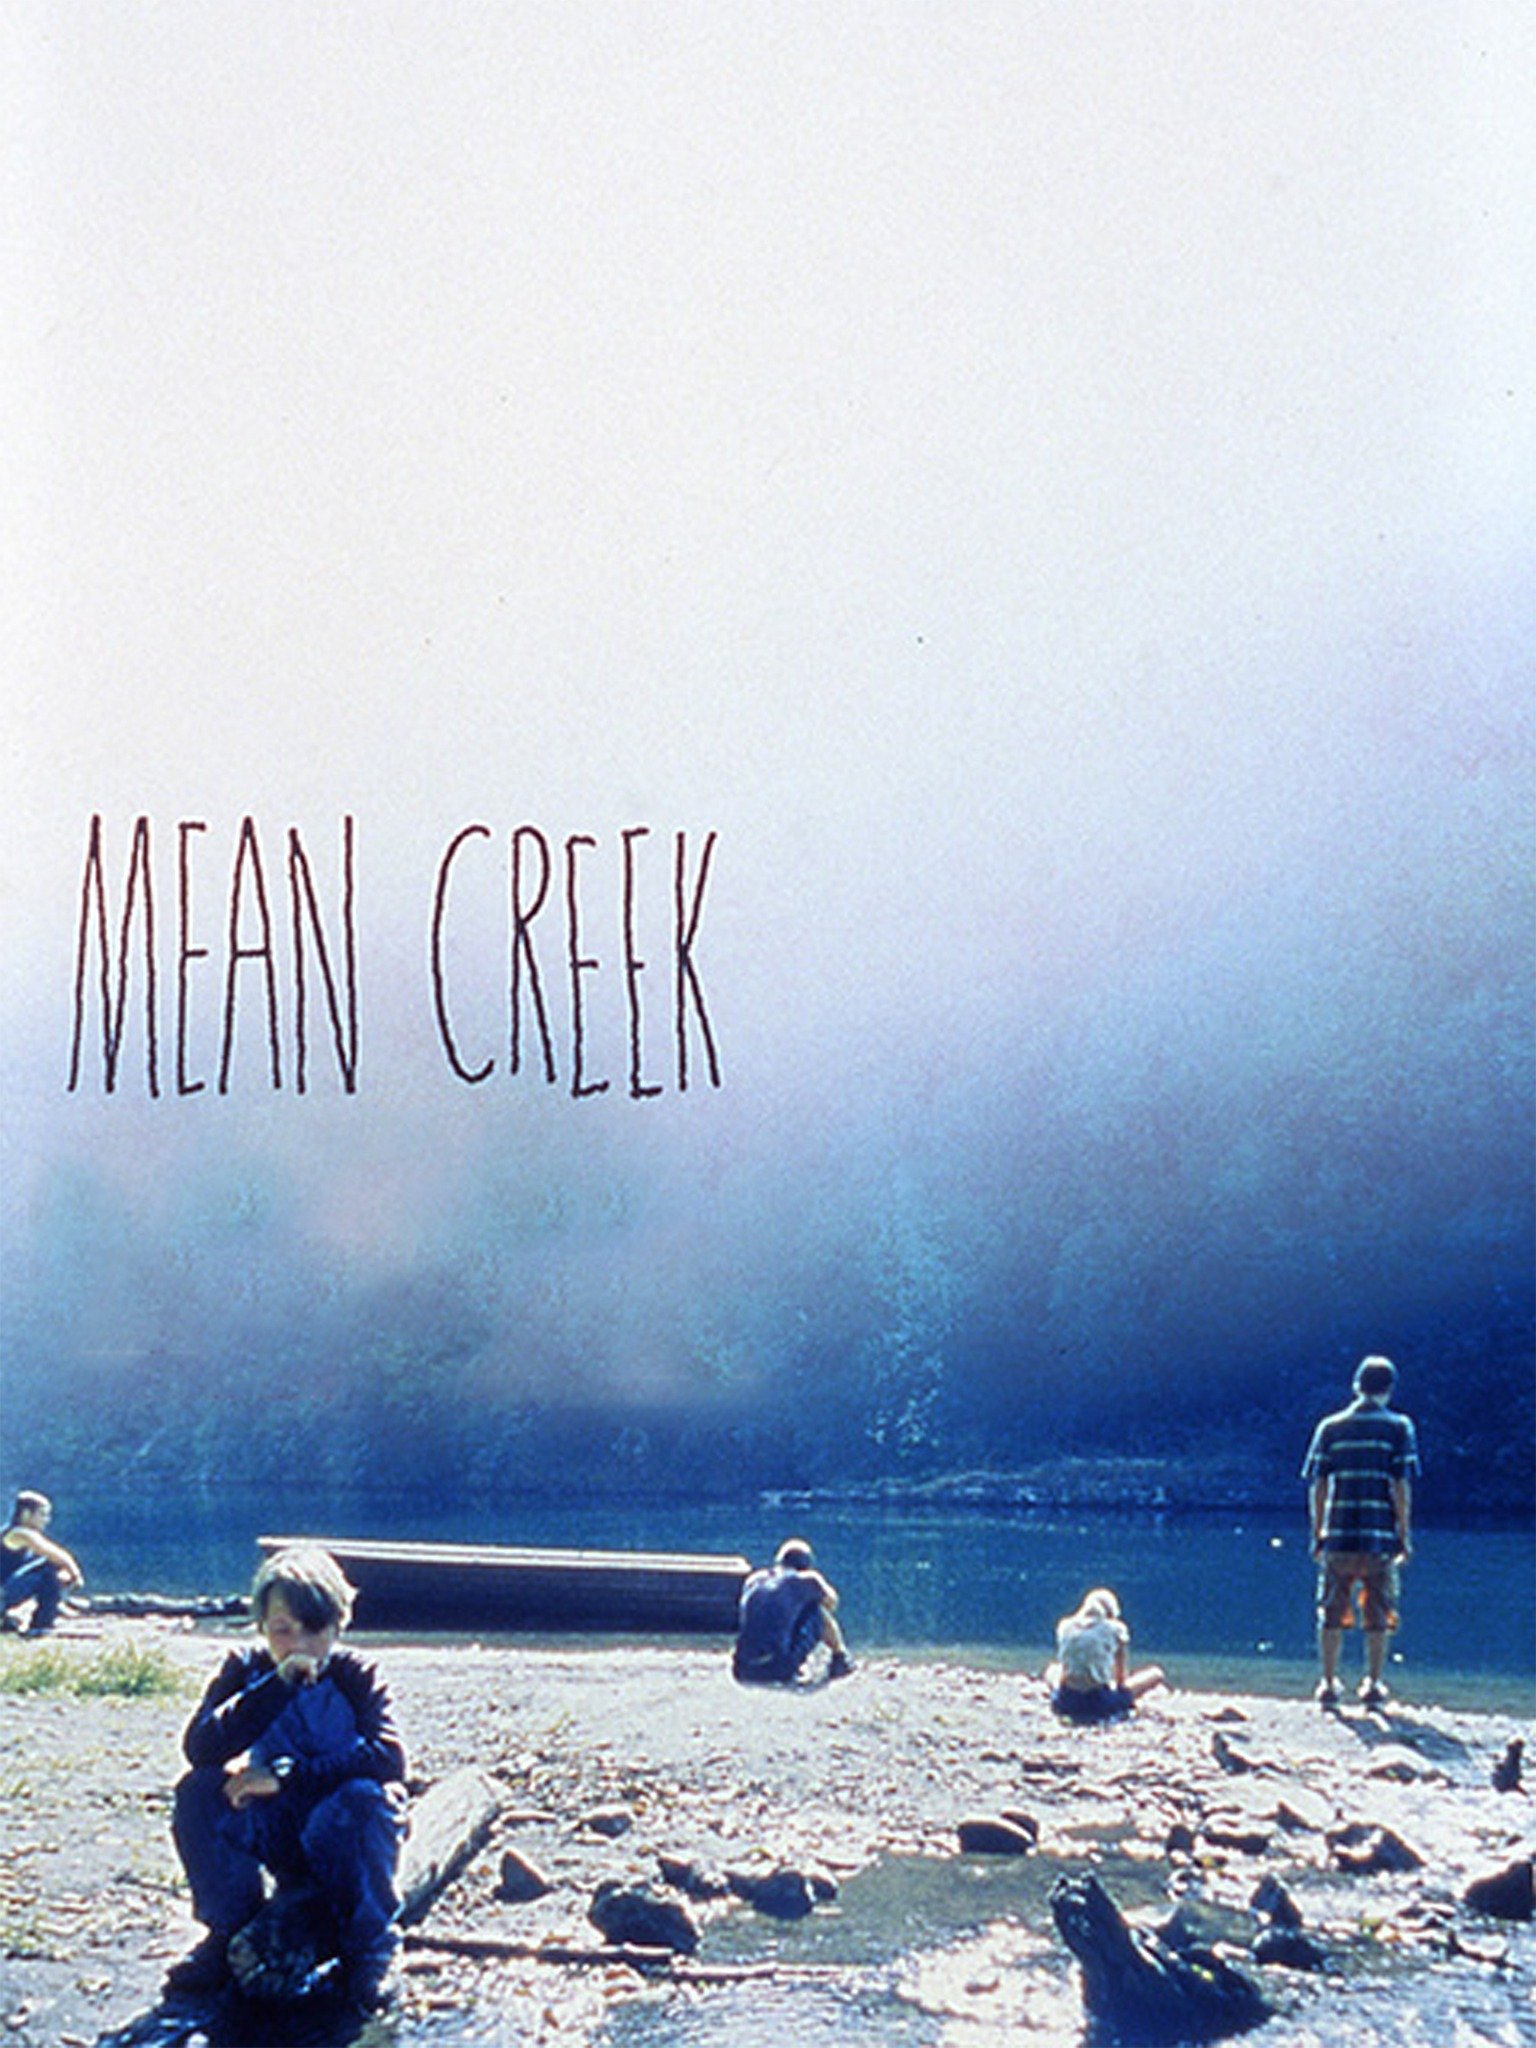 Mean Creek pic photo